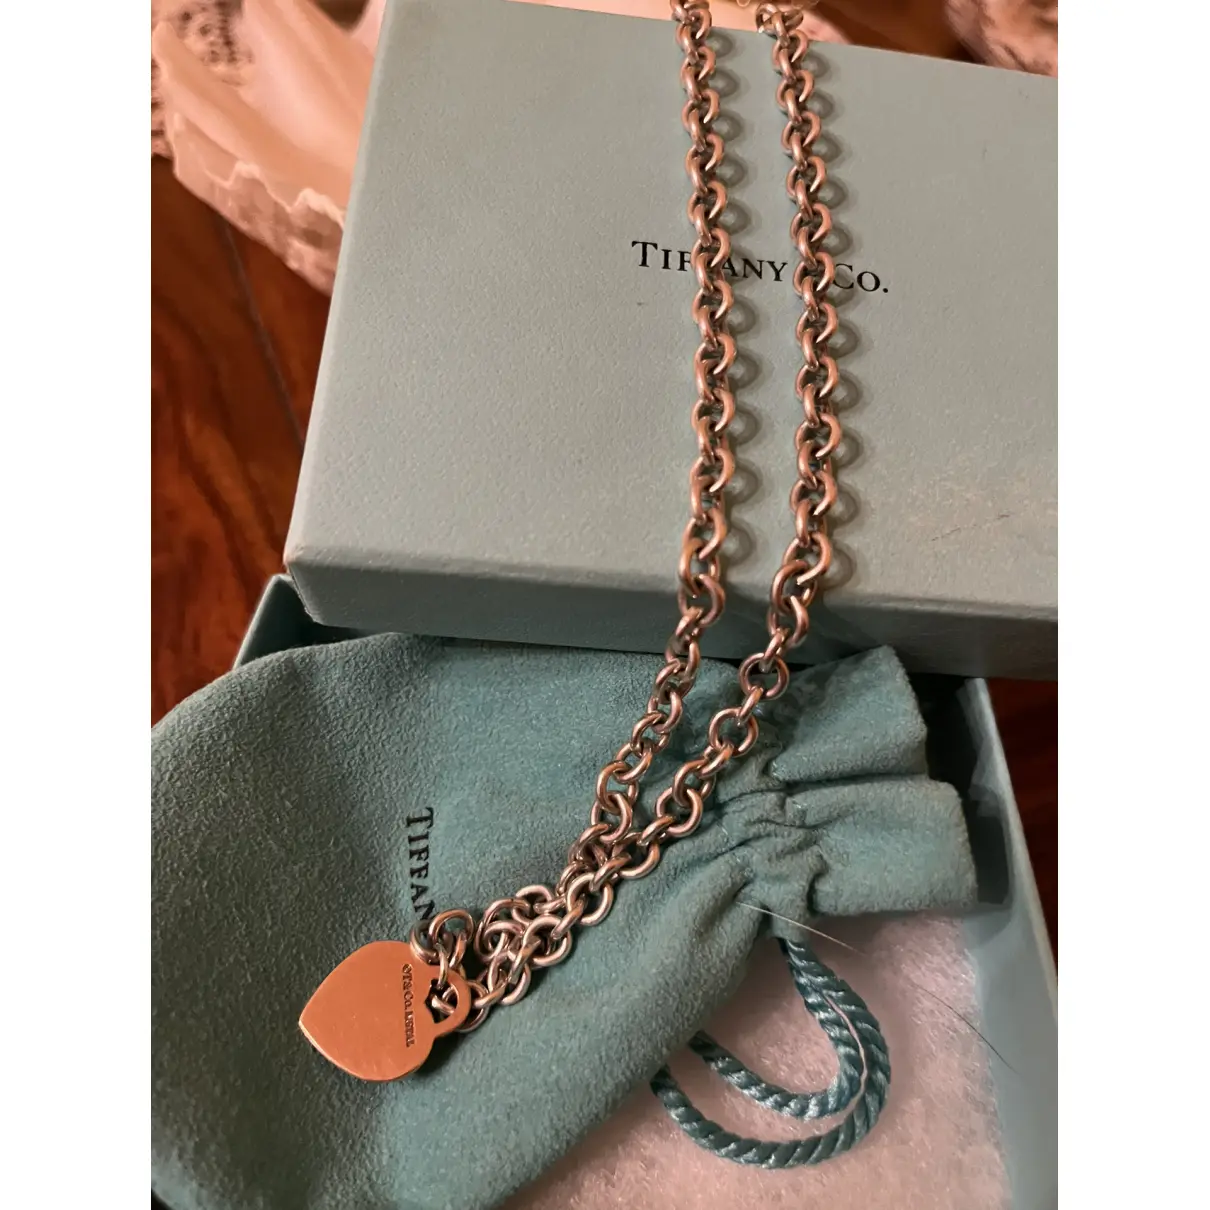 Buy Tiffany & Co Tiffany T silver necklace online